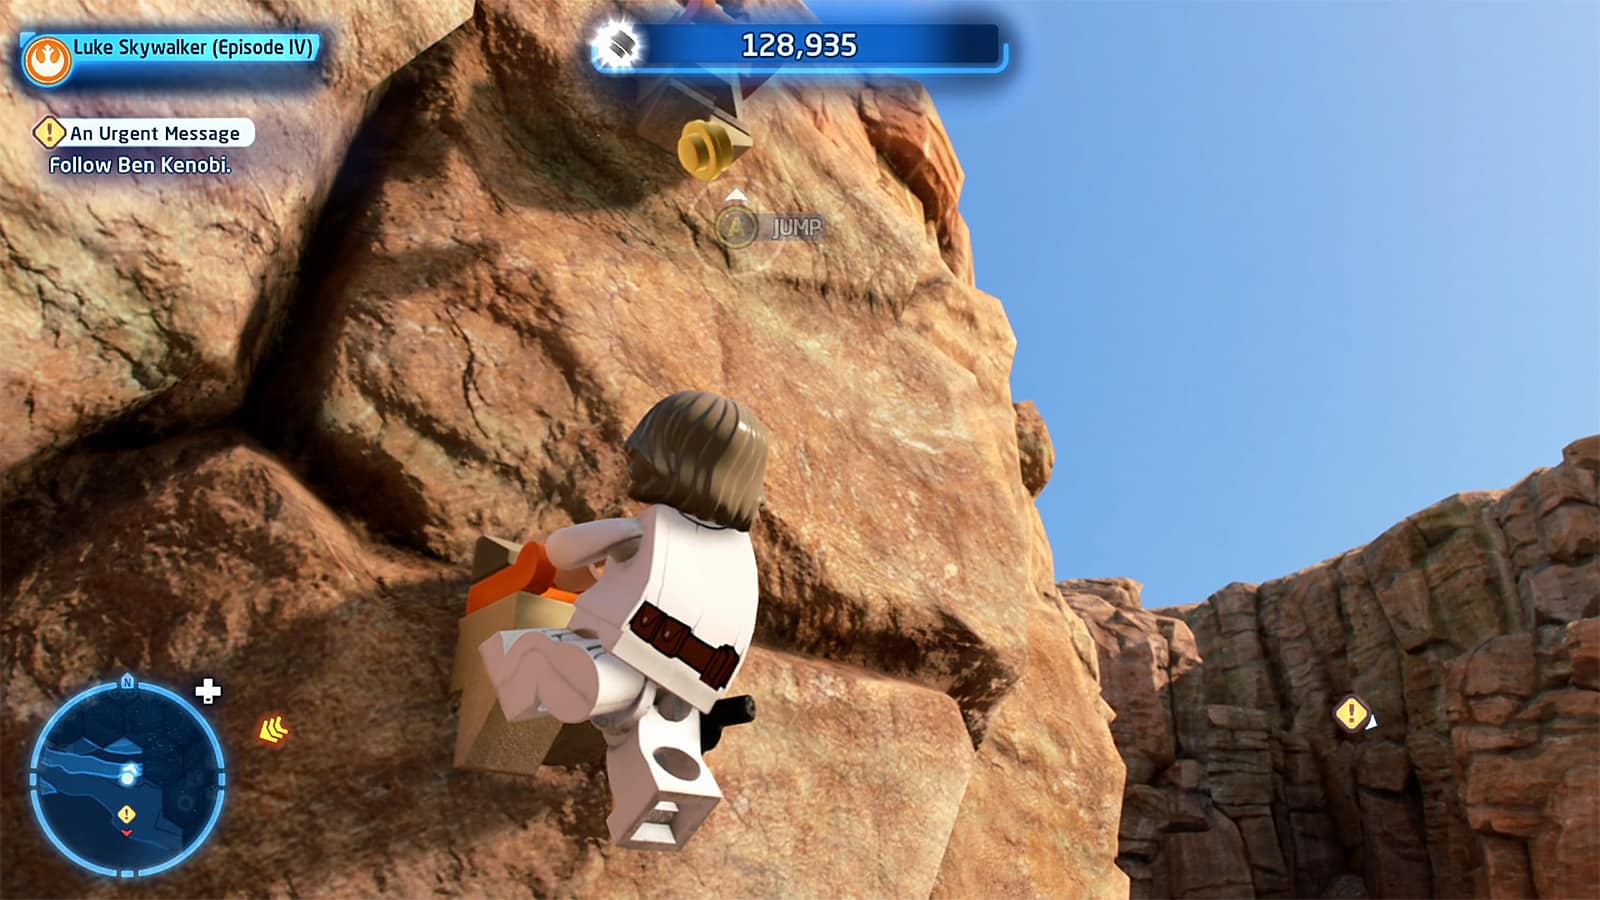 Luke Skywalker grappling up a cliff in LEGO Star Wars The Skywalker Saga